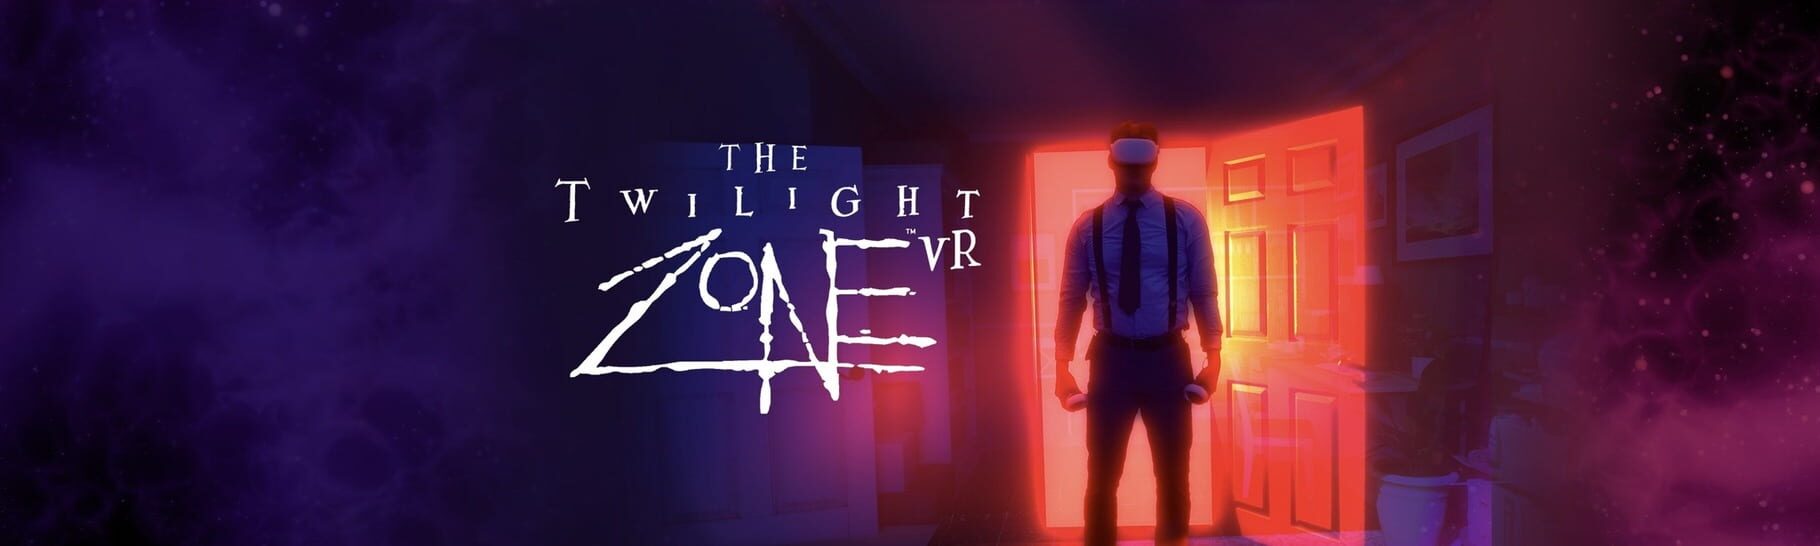 Arte - The Twilight Zone VR